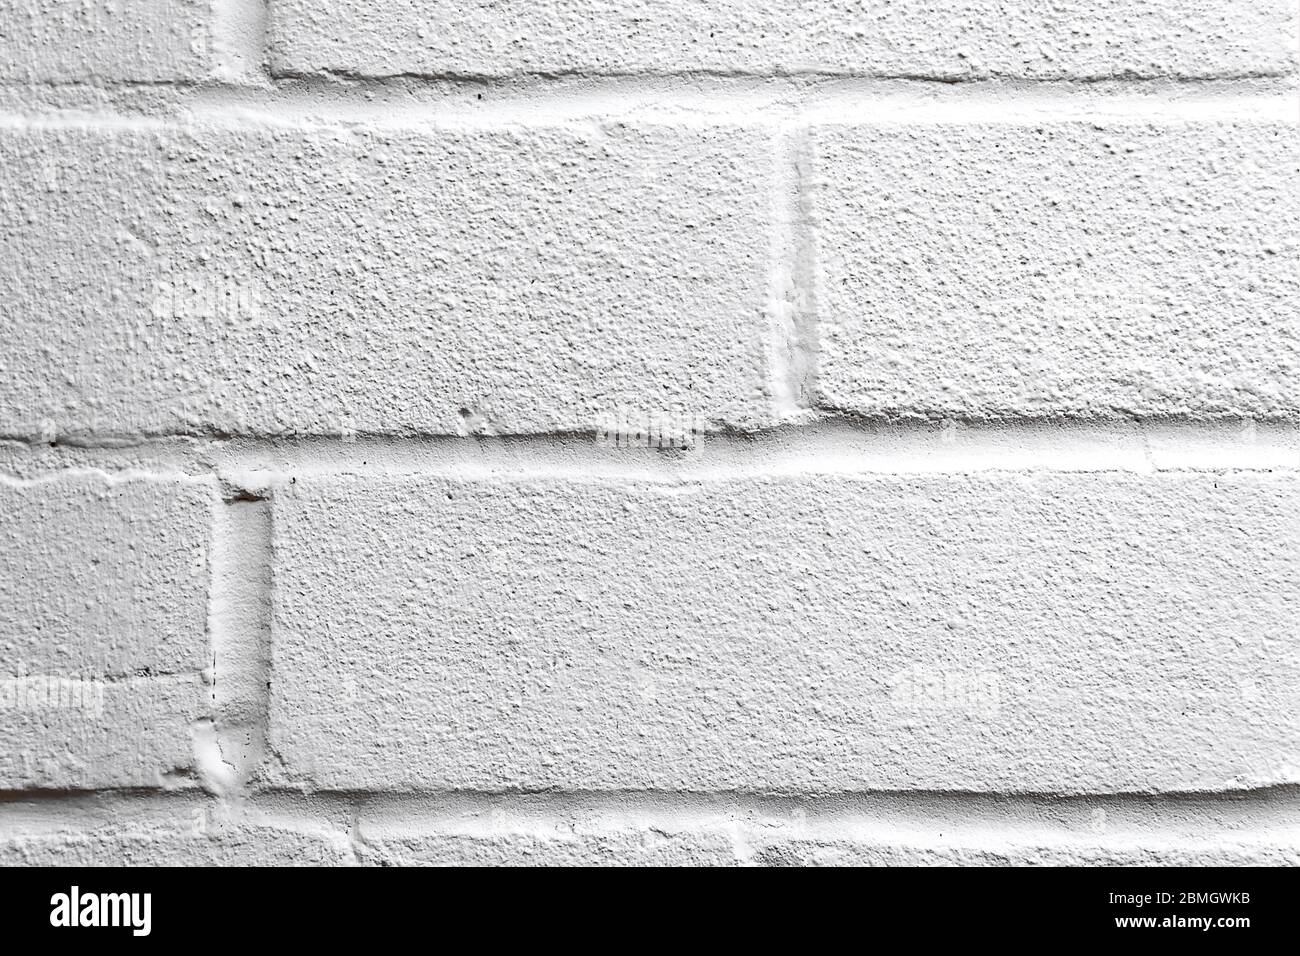 Casa pared de ladrillo pintado de blanco e imágenes de alta resolución - Alamy